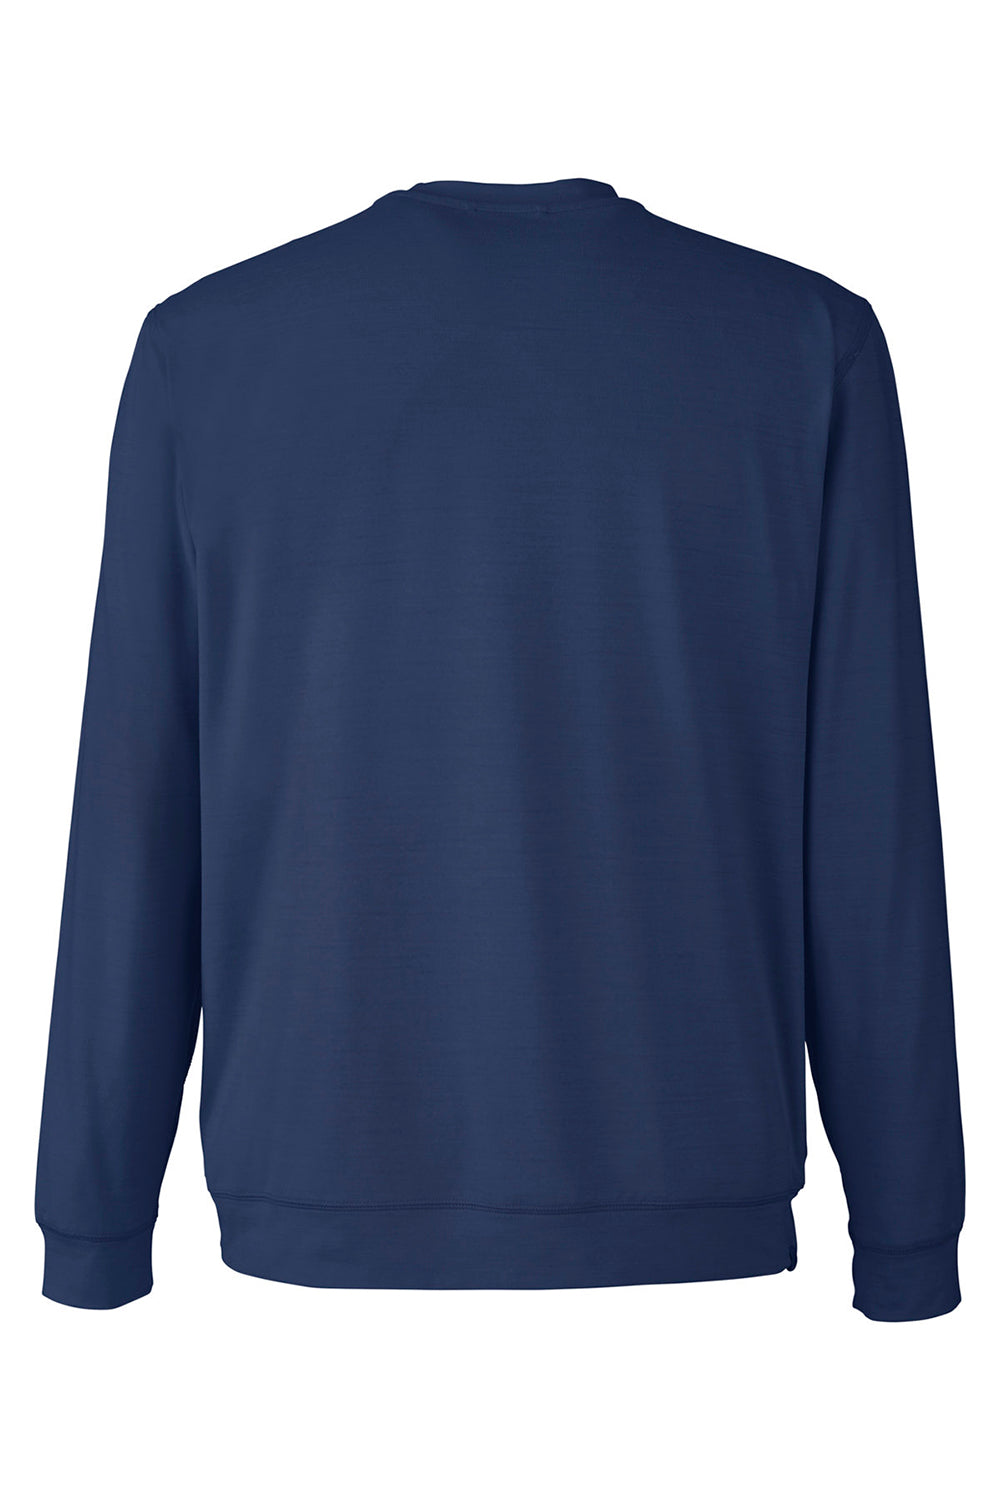 Puma 535500 Mens Cloudspun Crewneck Sweatshirt Heather Navy Blue Flat Back